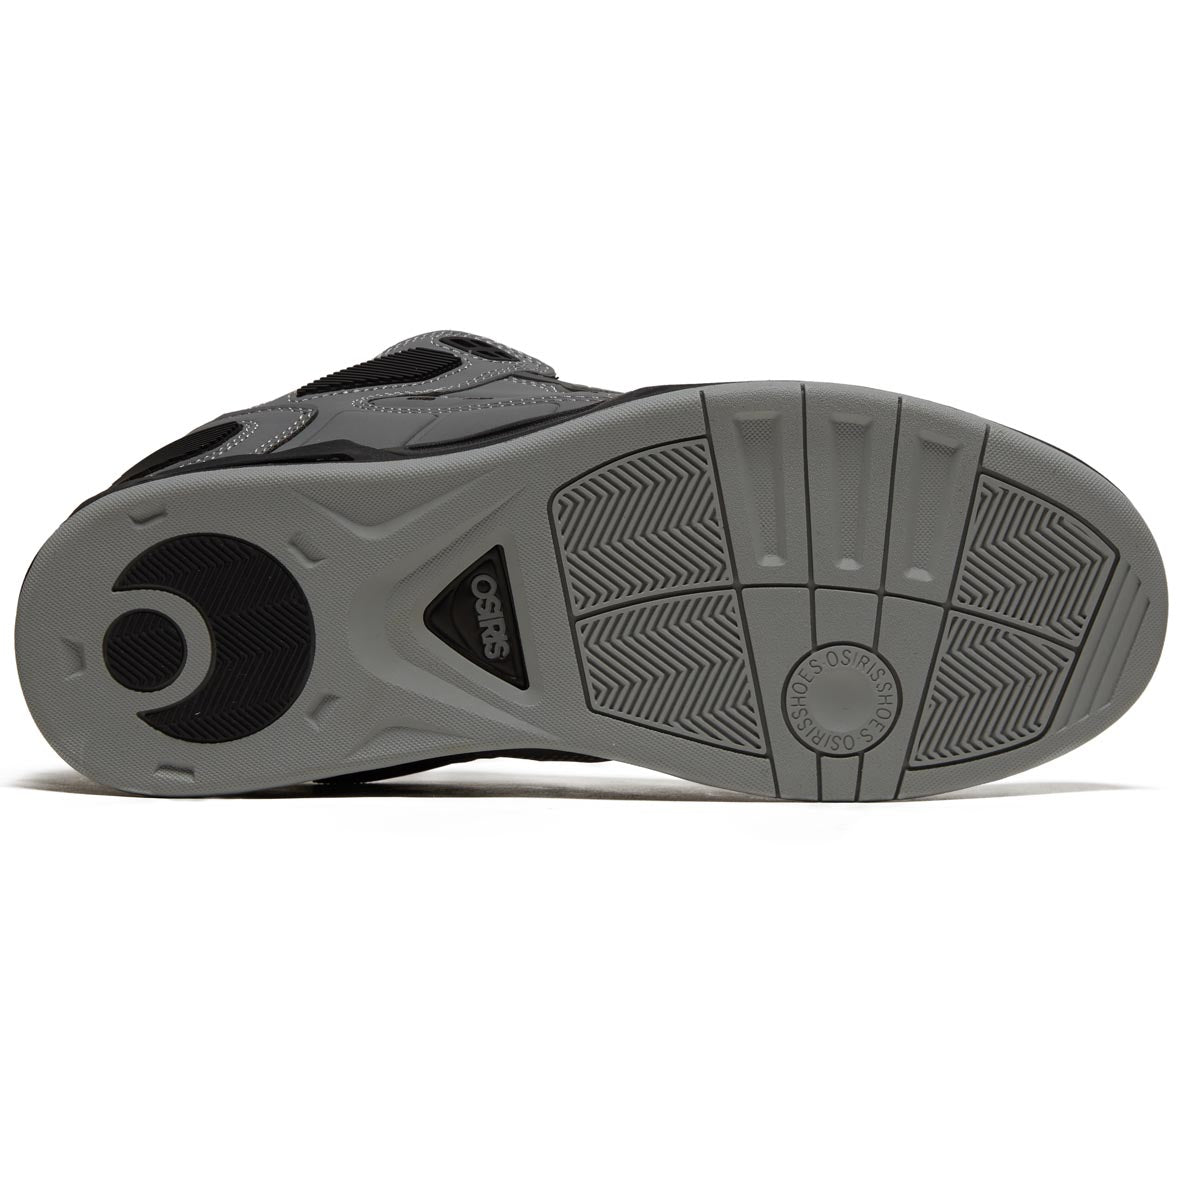 Osiris Peril Shoes - Grey/Black/Grey image 4